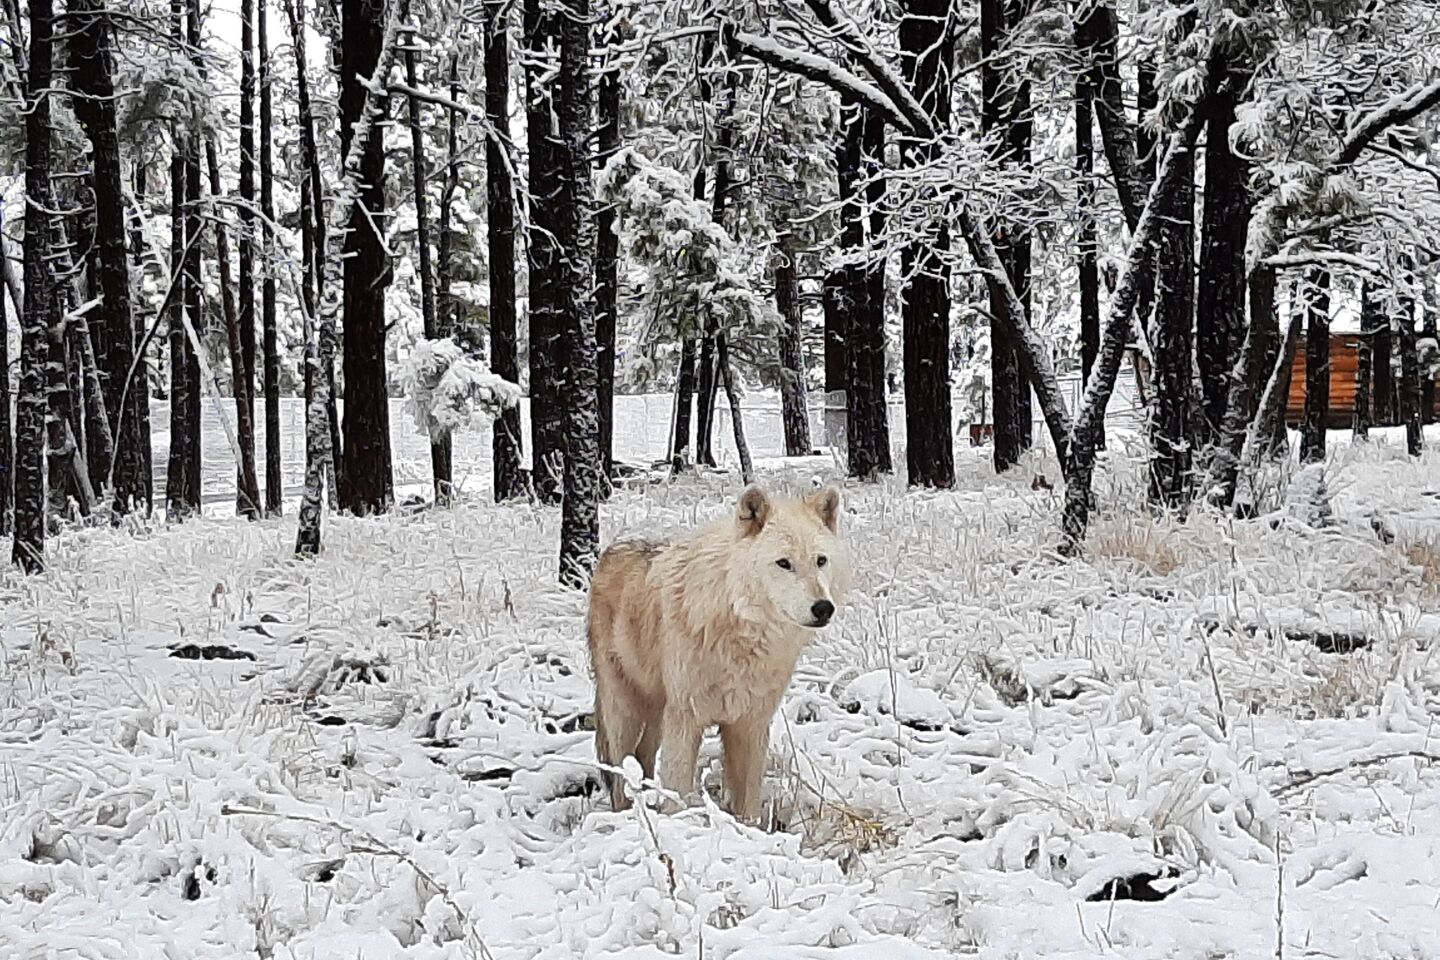 Geronimo the tundra wolf